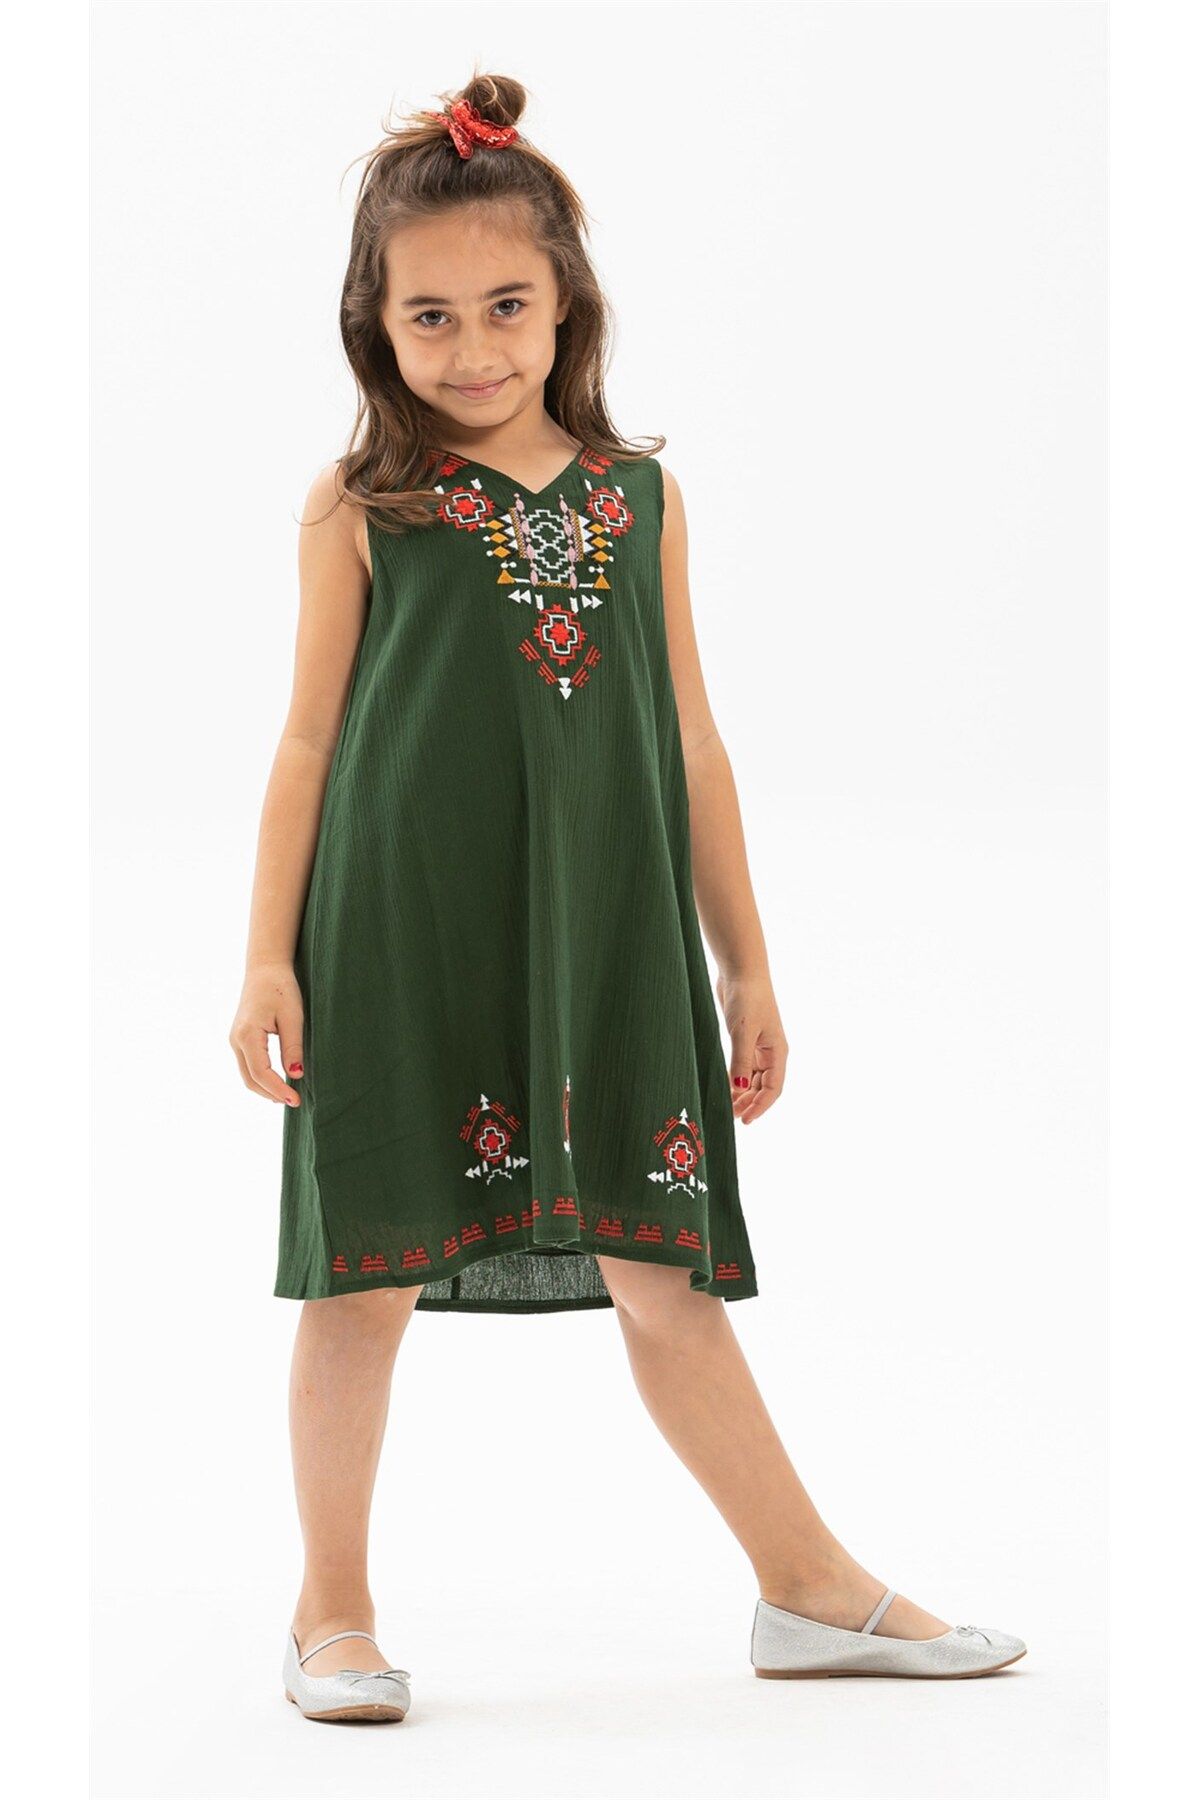 Eliş Şile Bezi لباس دخترانه پارچه ای Gökçe Shile سبز Ysl